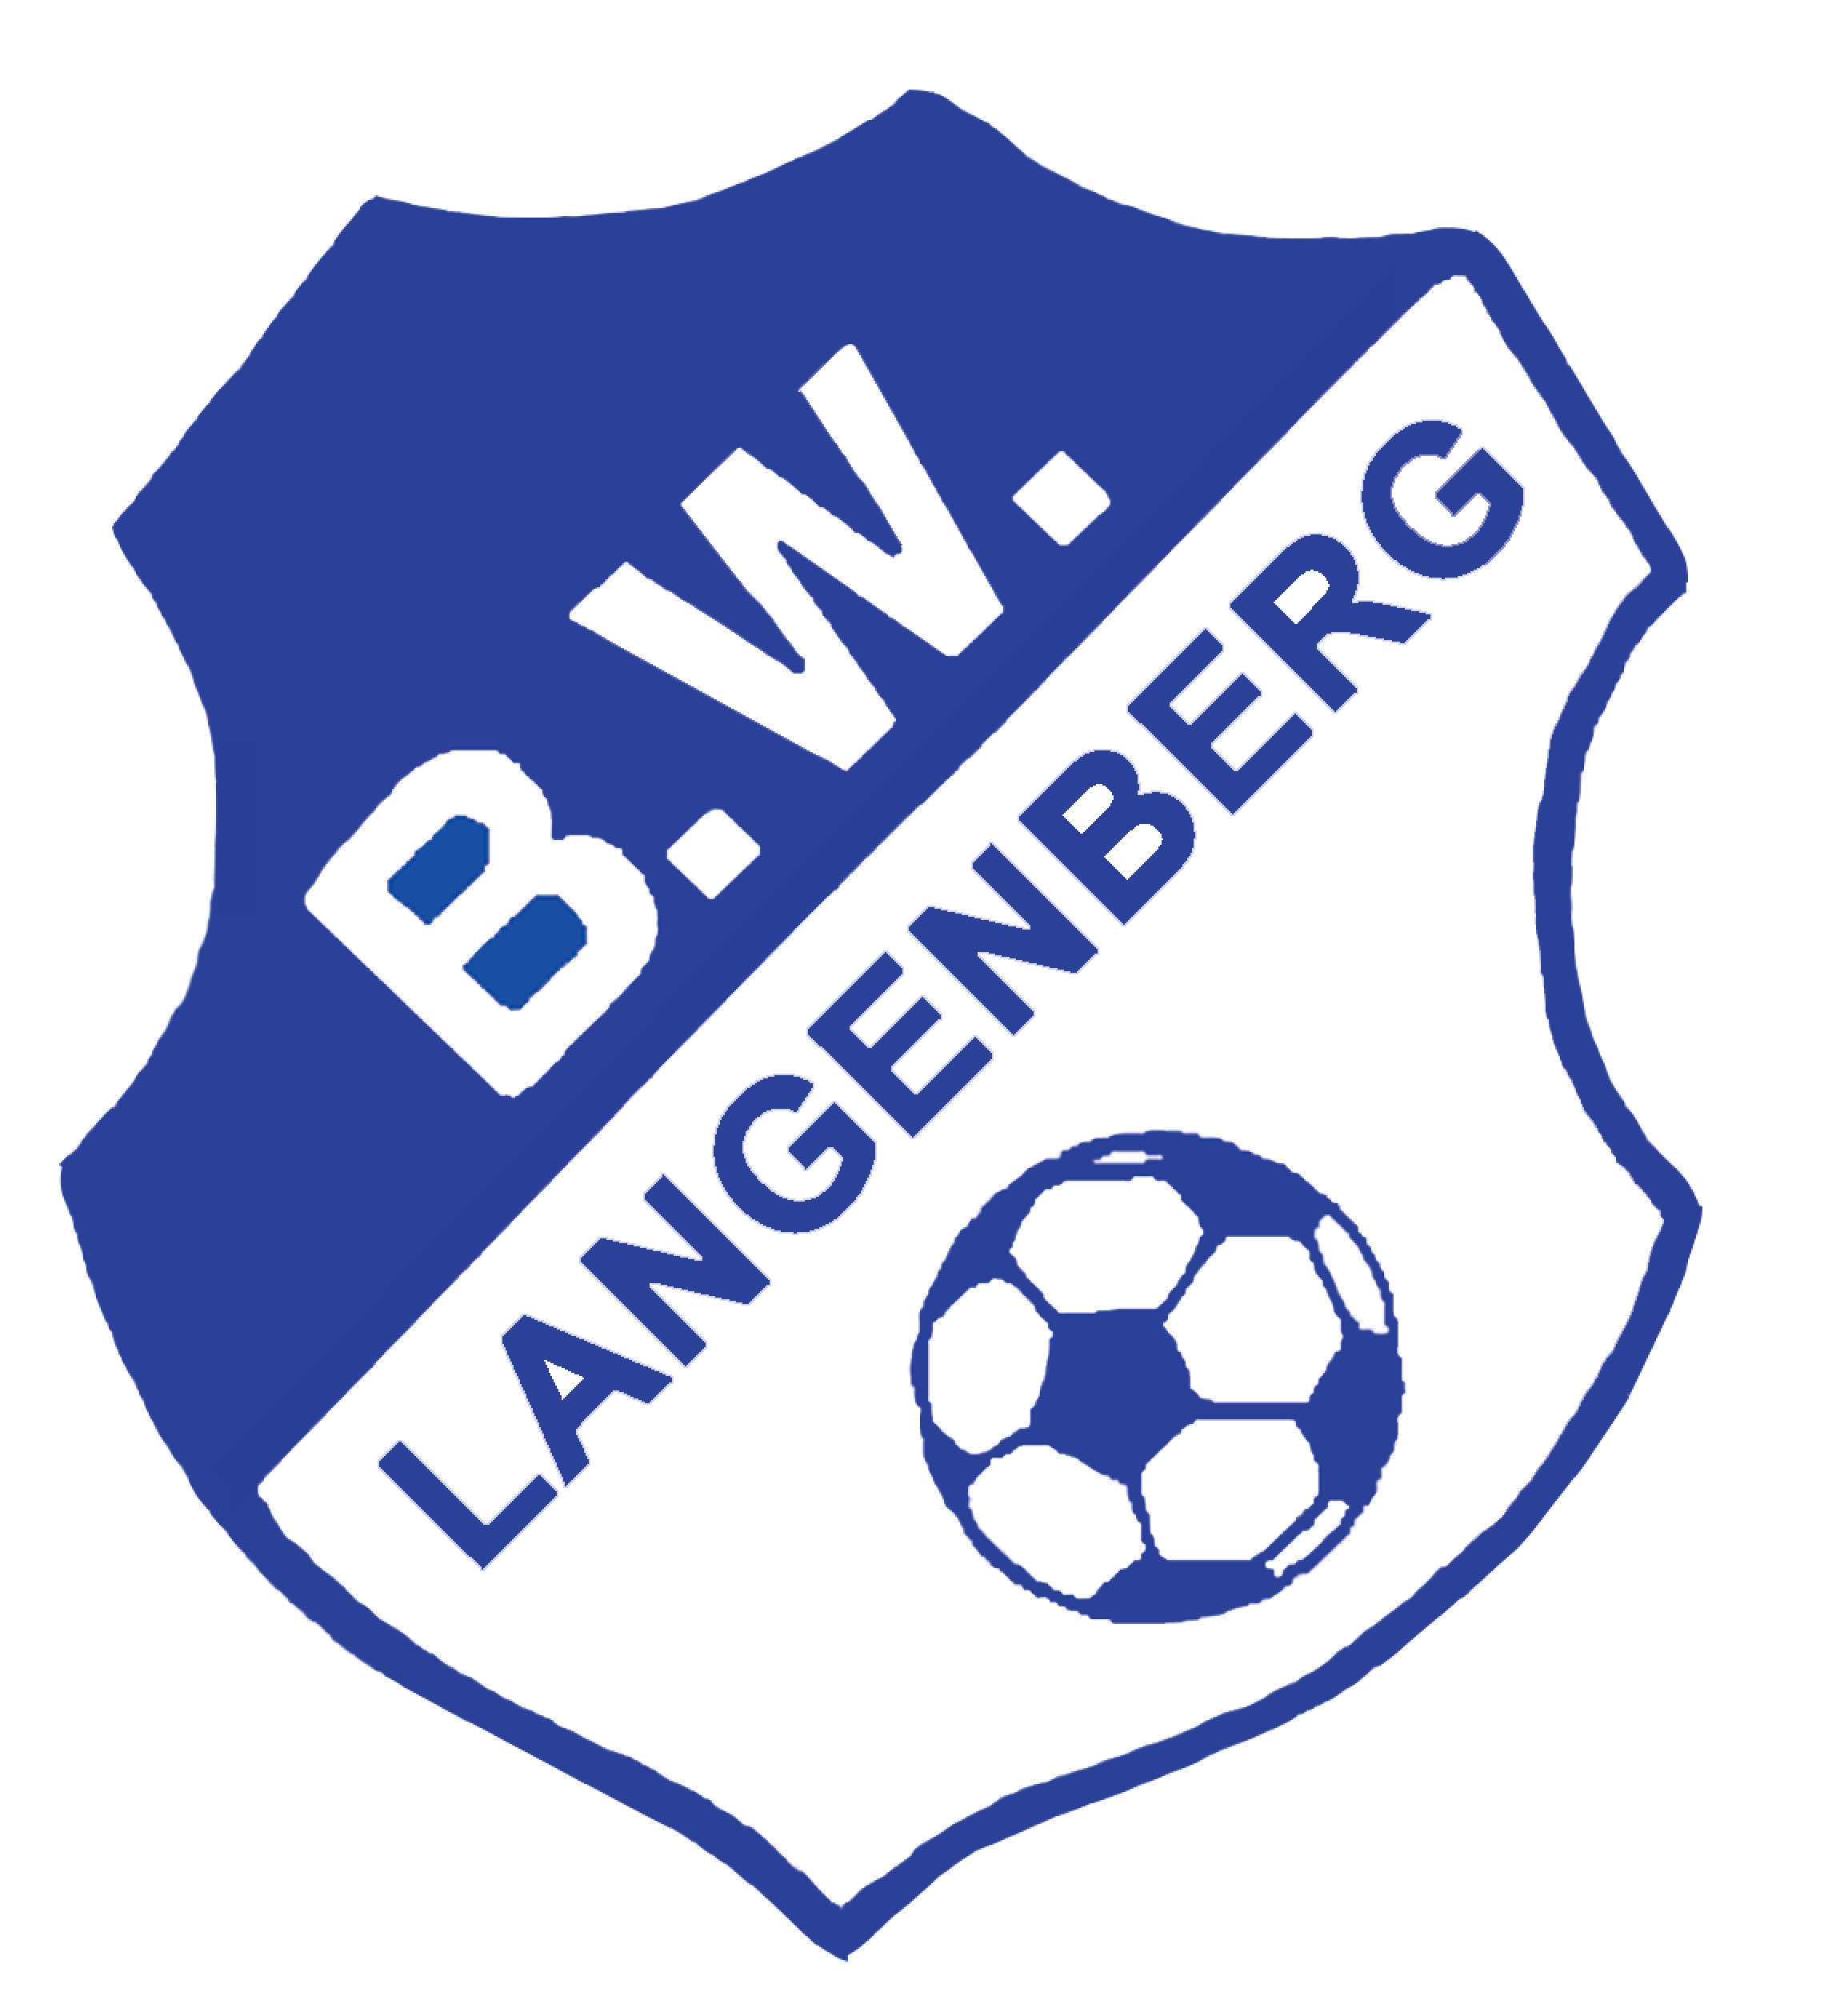 Blau Weiß Langenberg 1963 e. V.